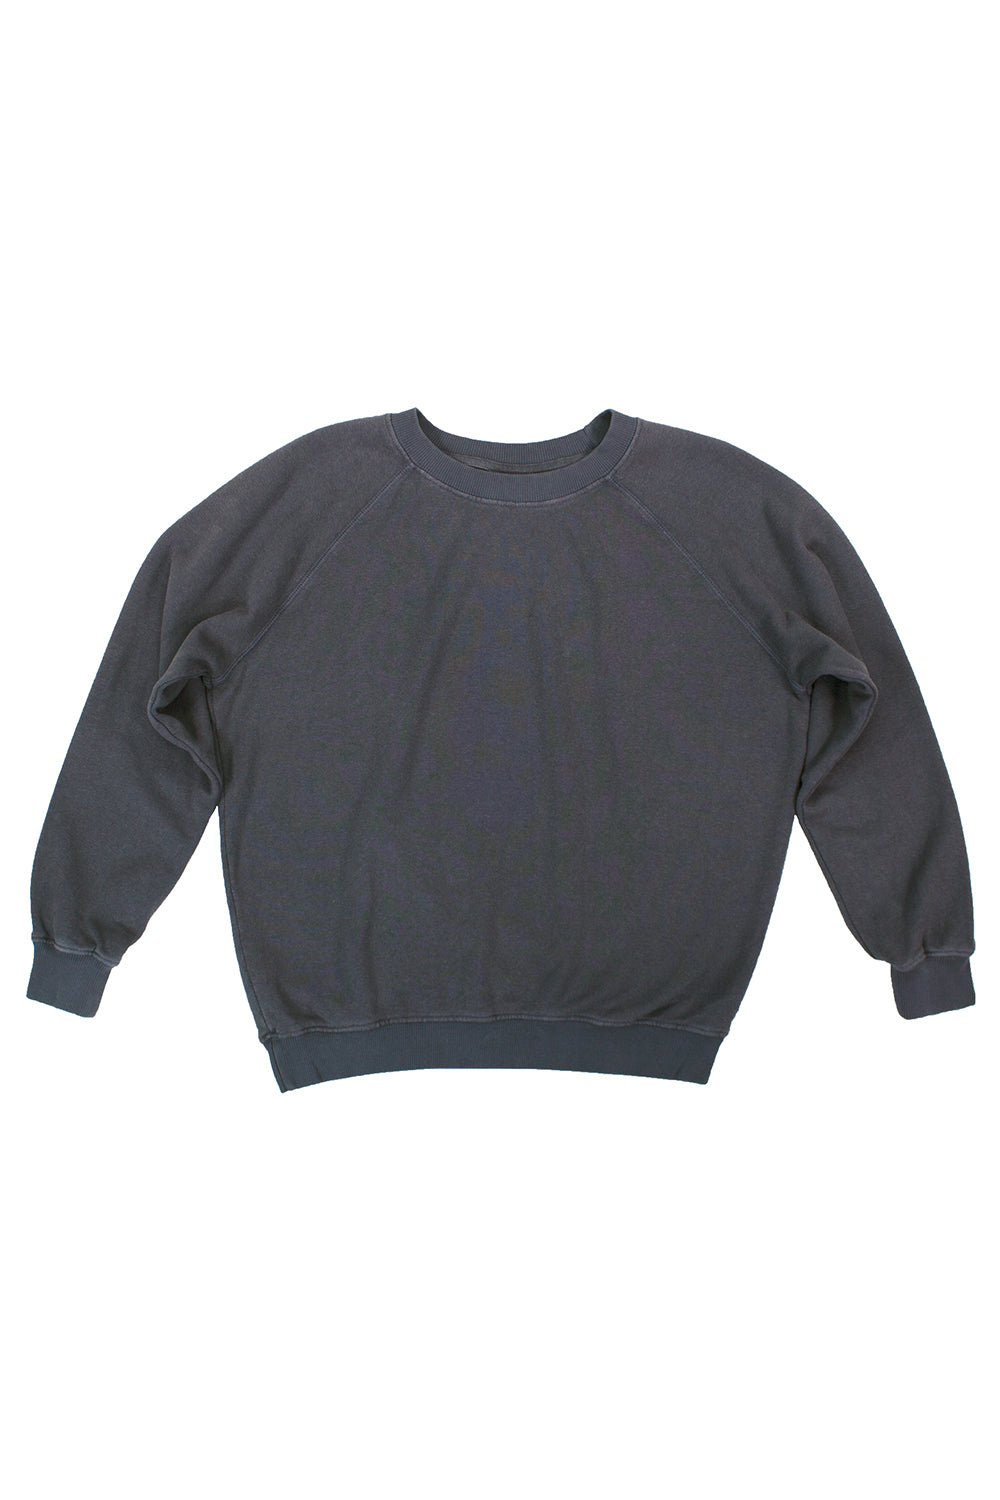 Bonfire Raglan Sweatshirt | Jungmaven Hemp Clothing & Accessories / Color: Diesel Gray